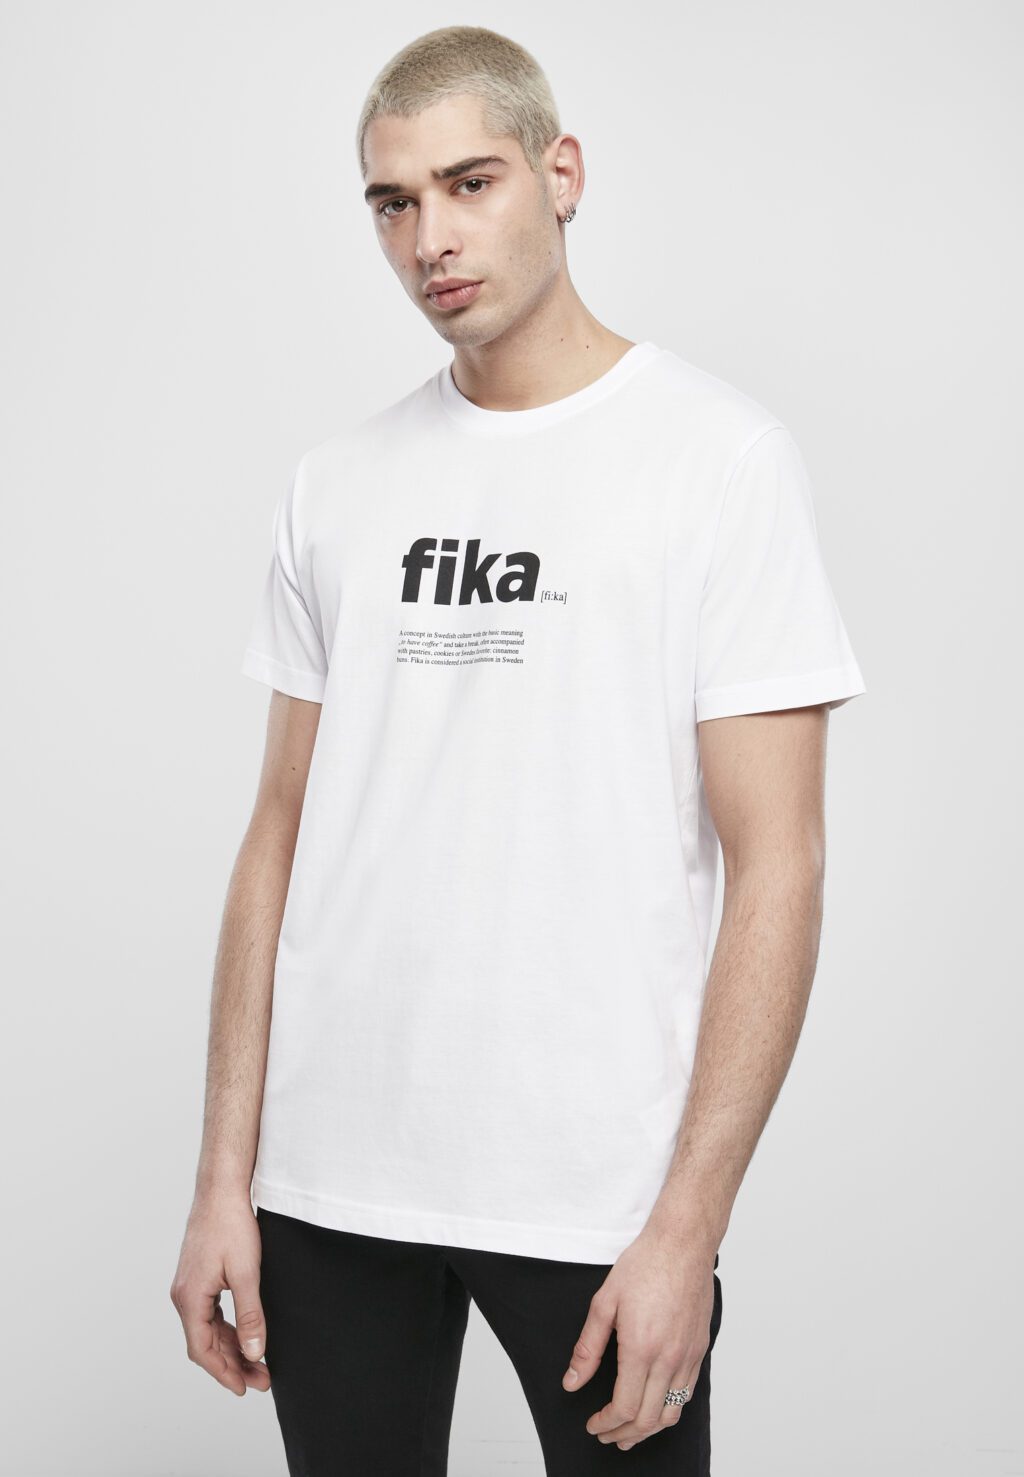 Fika Definition T-Shirt Round Neck white MT1258